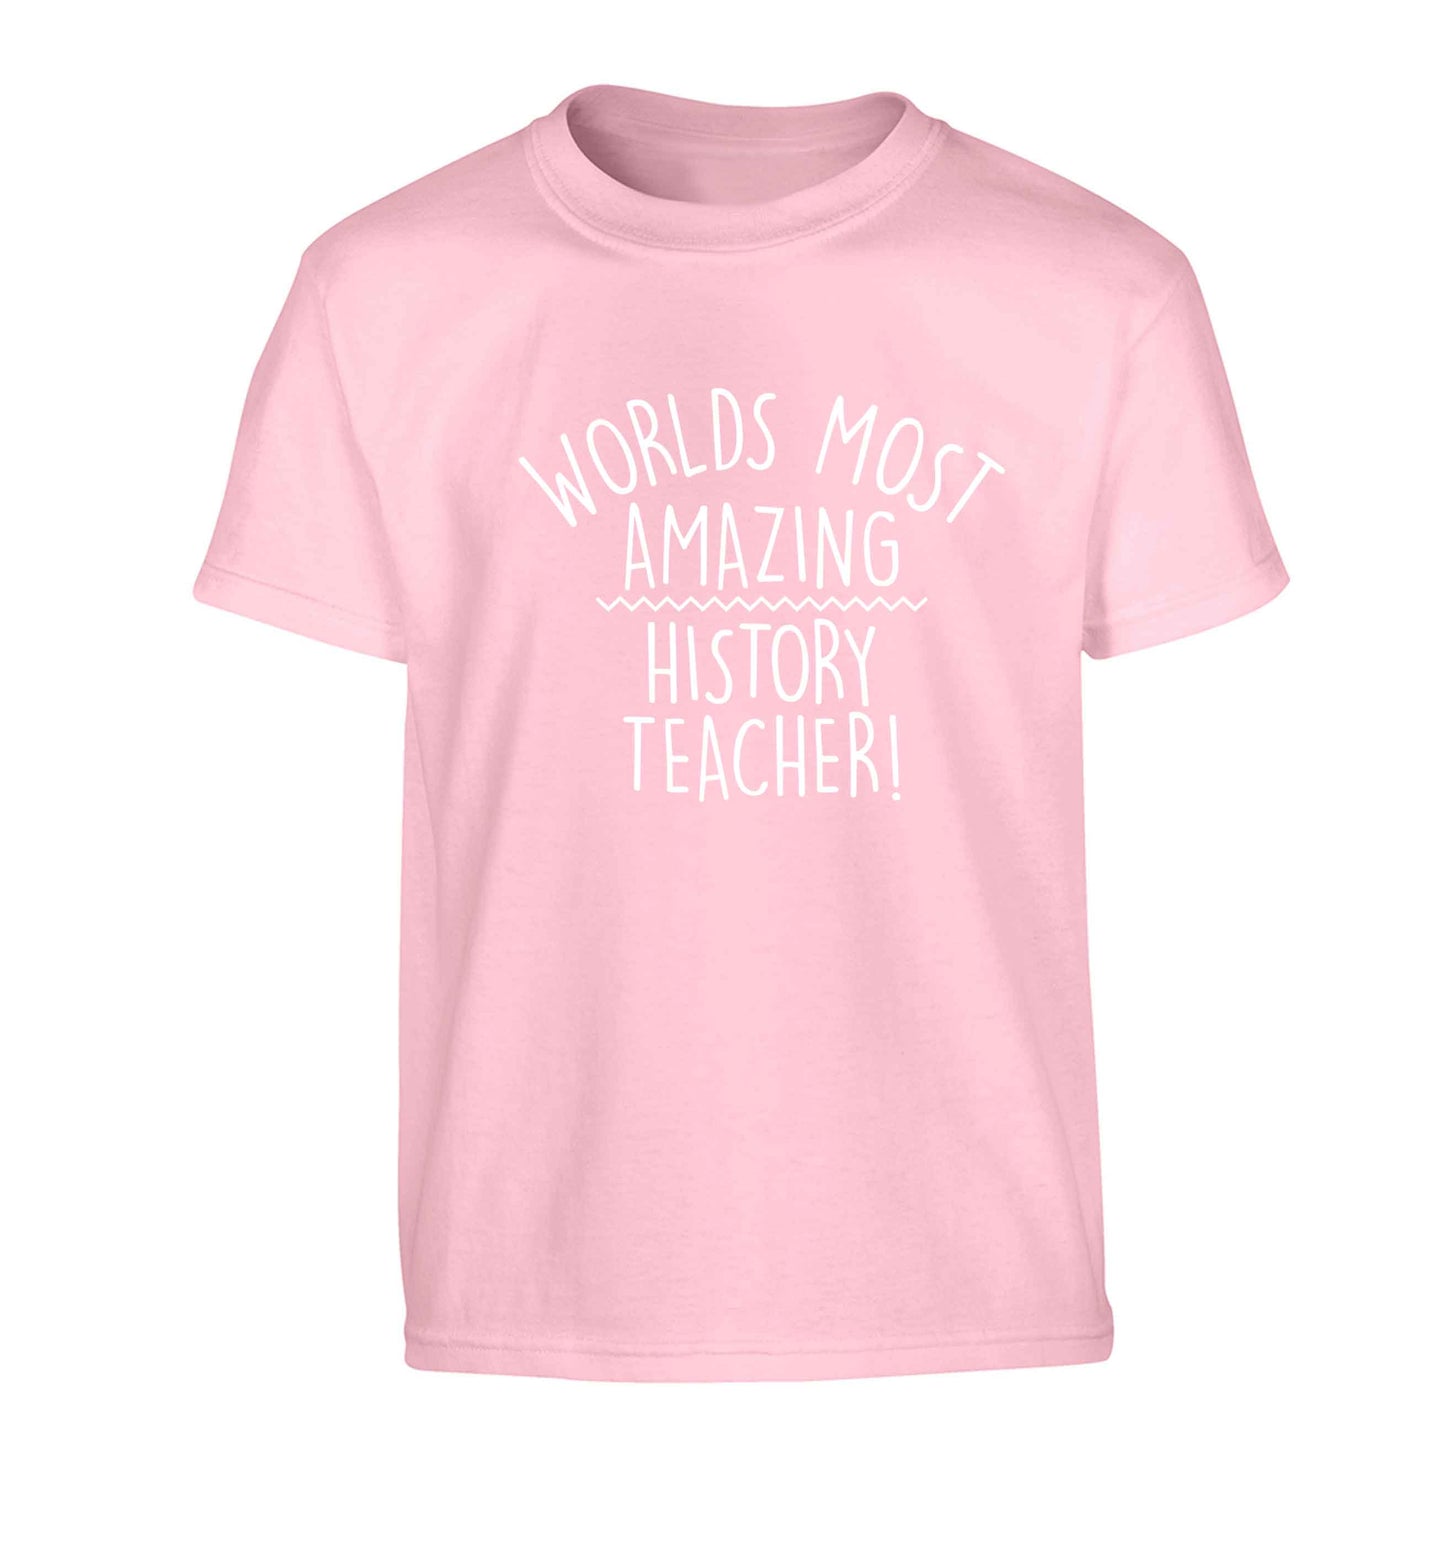 Worlds most amazing History teacher Children's light pink Tshirt 12-13 Years